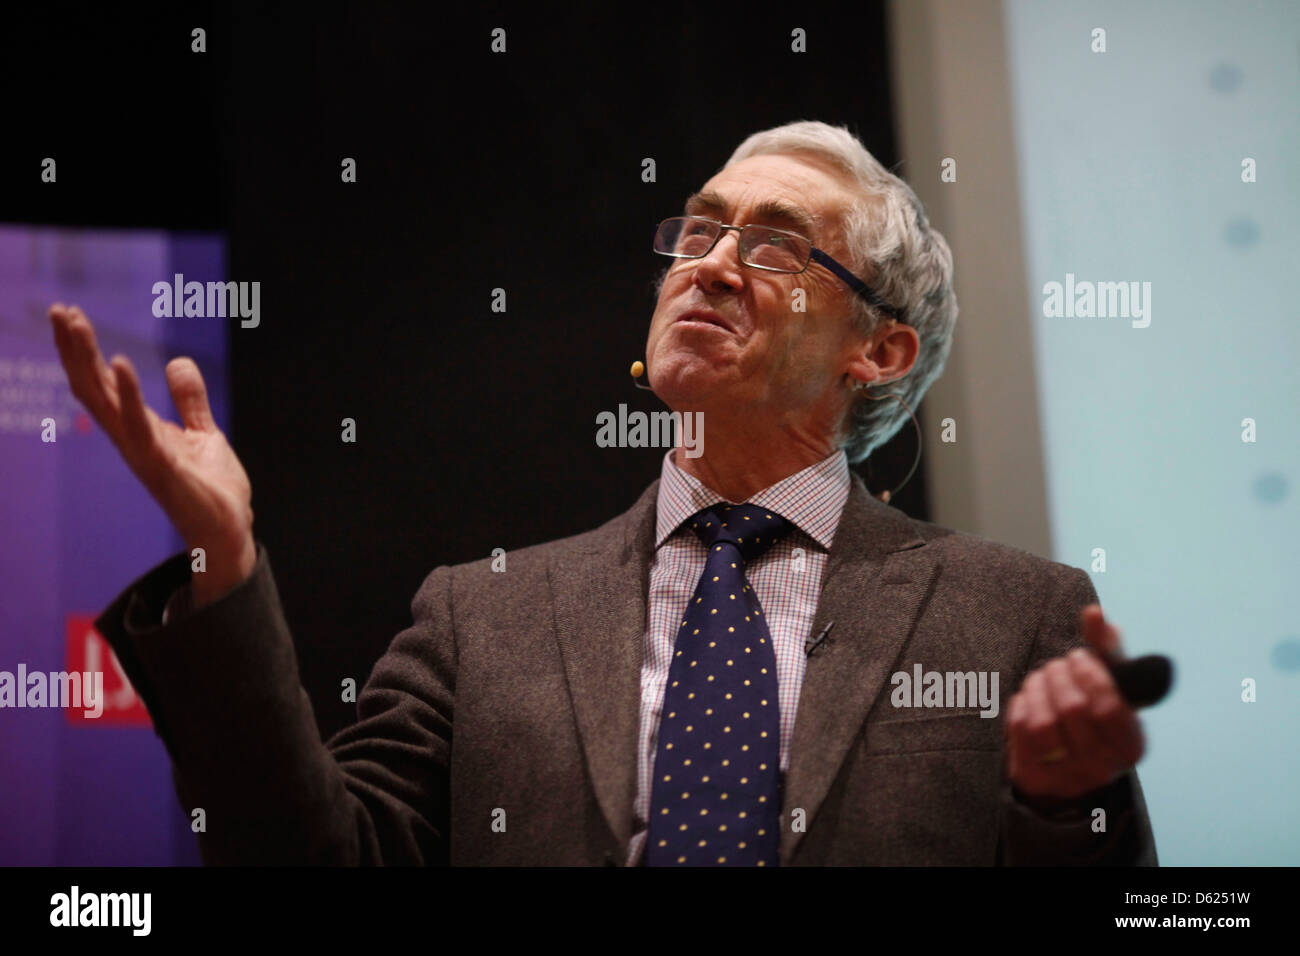 Professor Paul De Grauwe delivers a speech at LSE Stock Photo